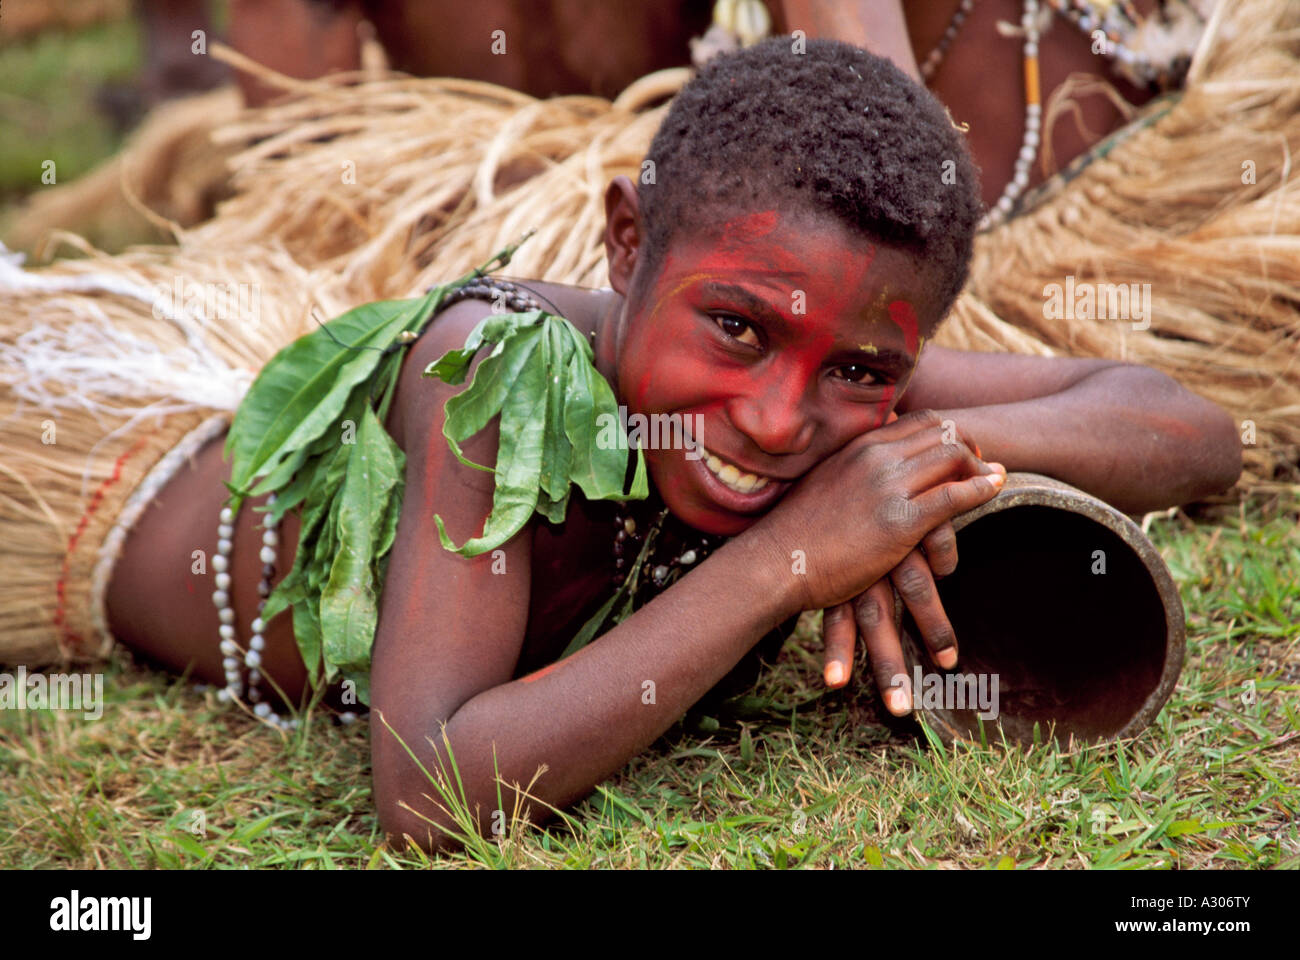 Stamm-Kinder am Singen Singen Festival Mt Hagen Papua Neu Guinea Stockfoto